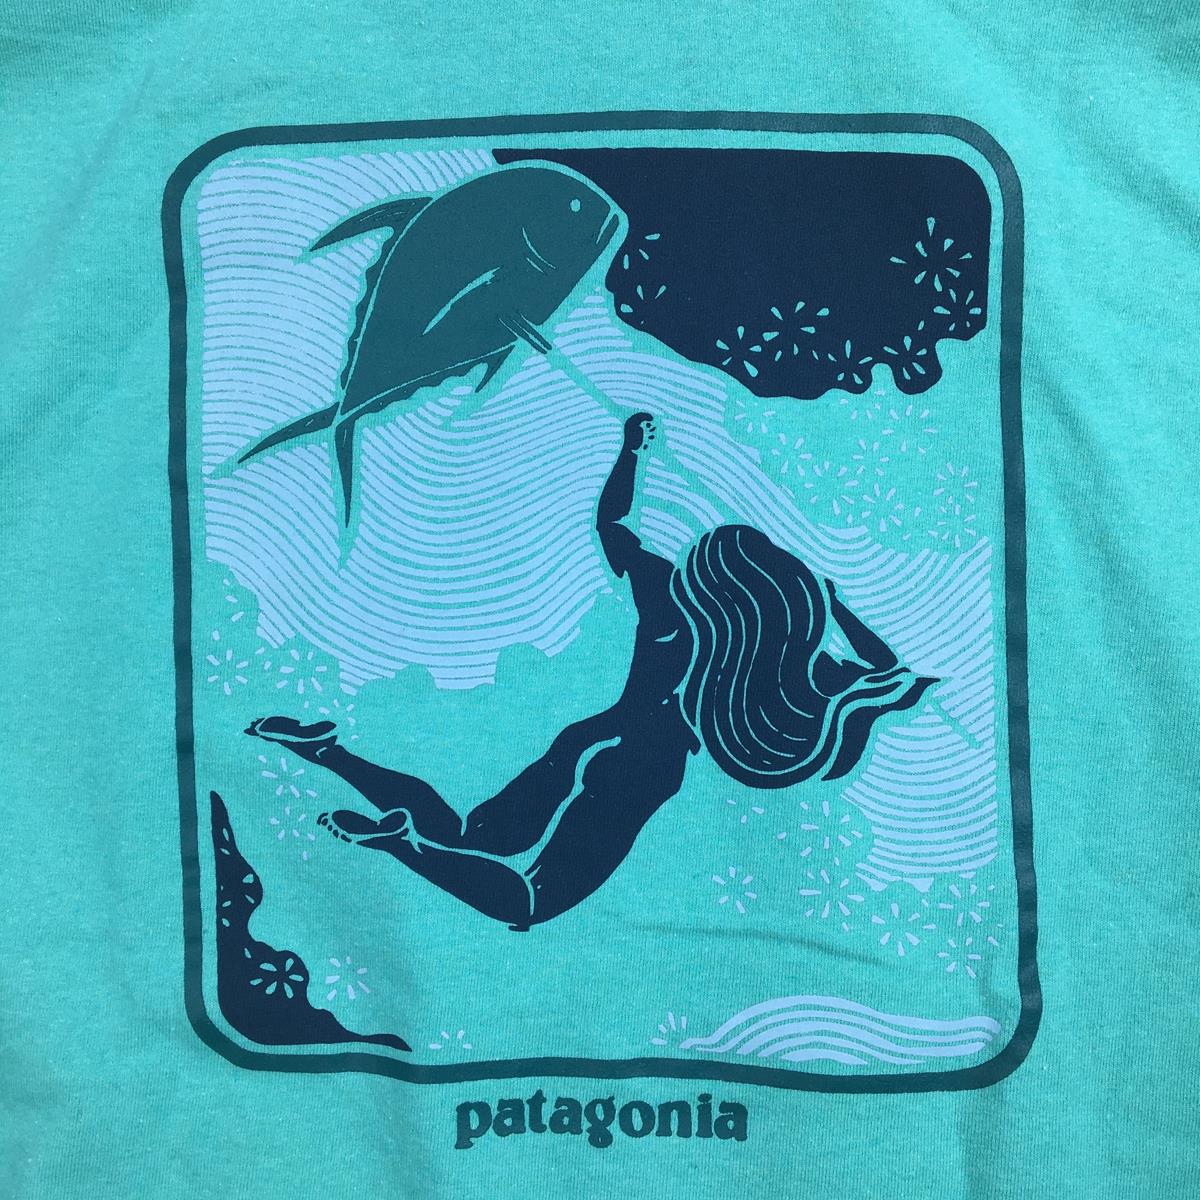 【MEN's XS】 パタゴニア ディフェンド アワ オーシャンズ レスポンシビリティー Defend Our Oceans Responsibili Tee Tシャツ オーガニックコットン ポリエステル PATAGONIA 37573 FRTL Fresh Teal グリーン系